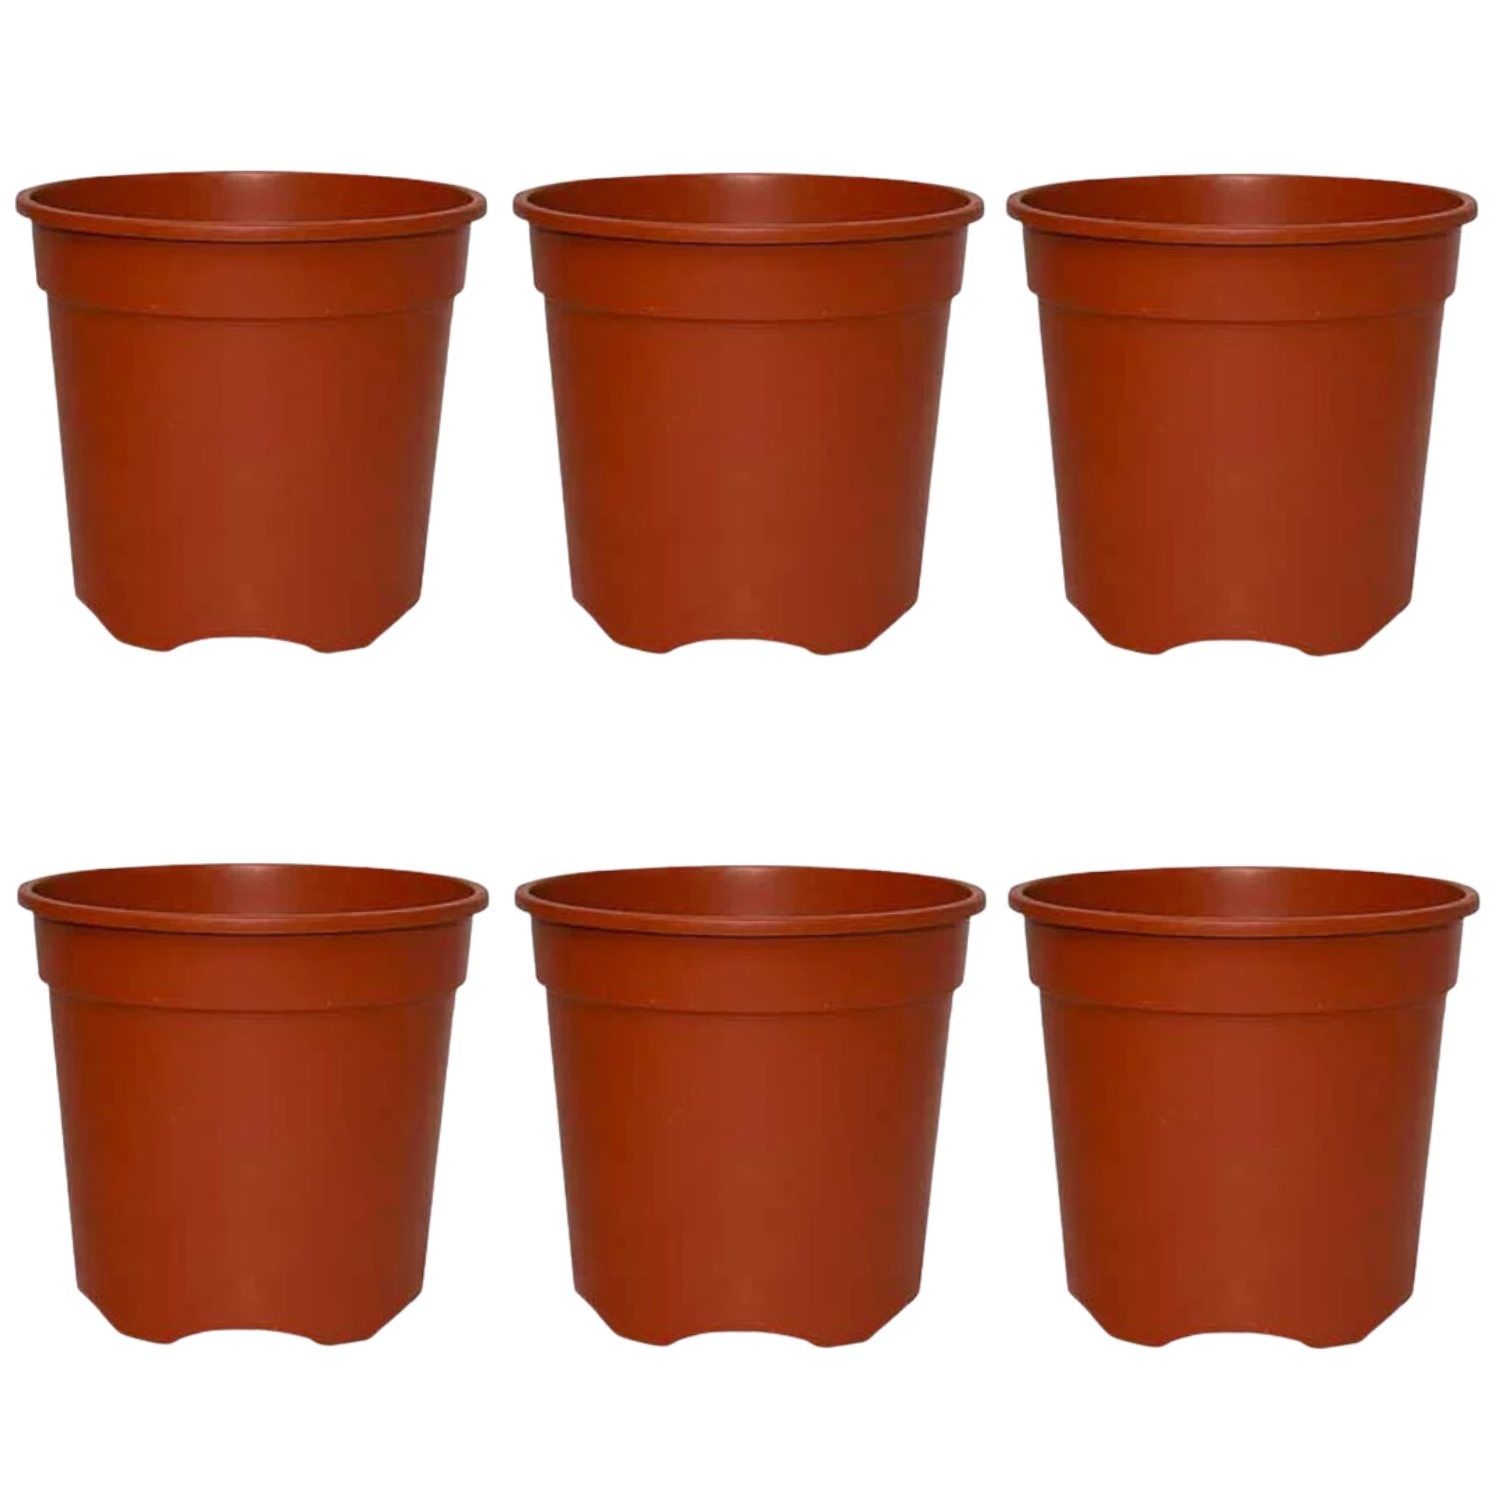 9 Inch Gro Pro Grower Plastic Pot for Home & Garden